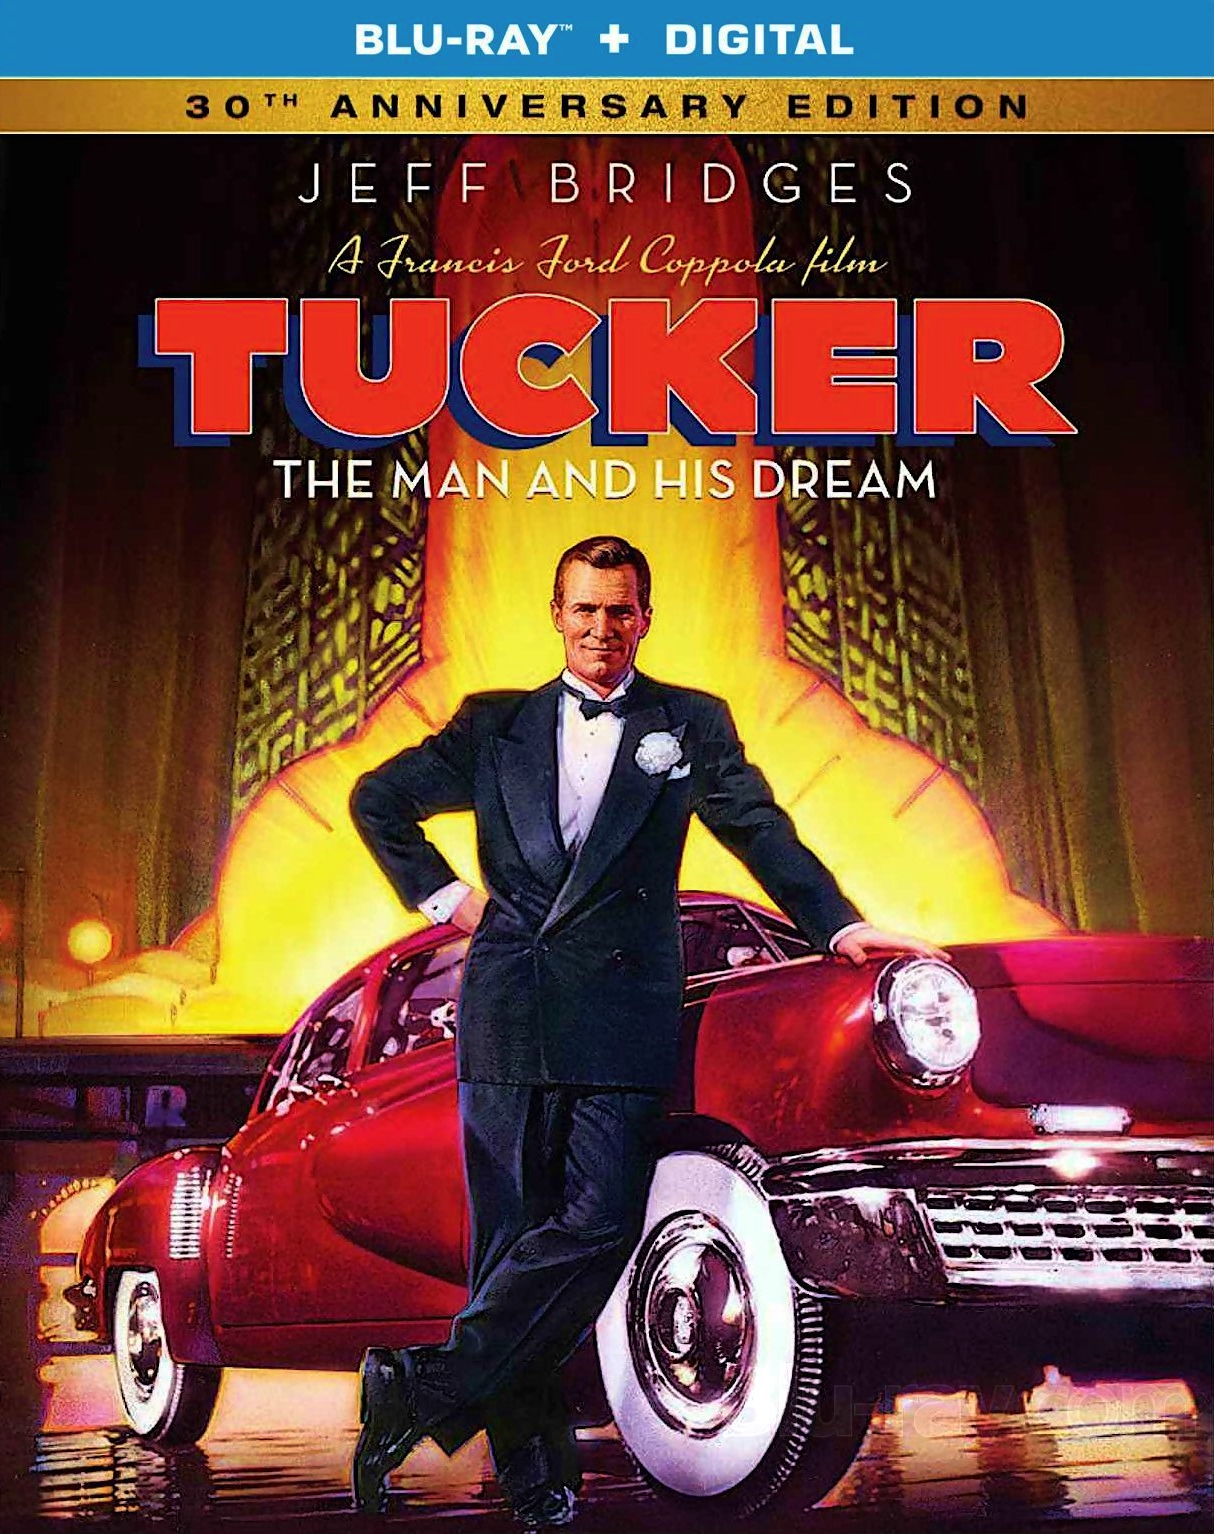 Did the Tucker movie get Preston Tucker's story right?